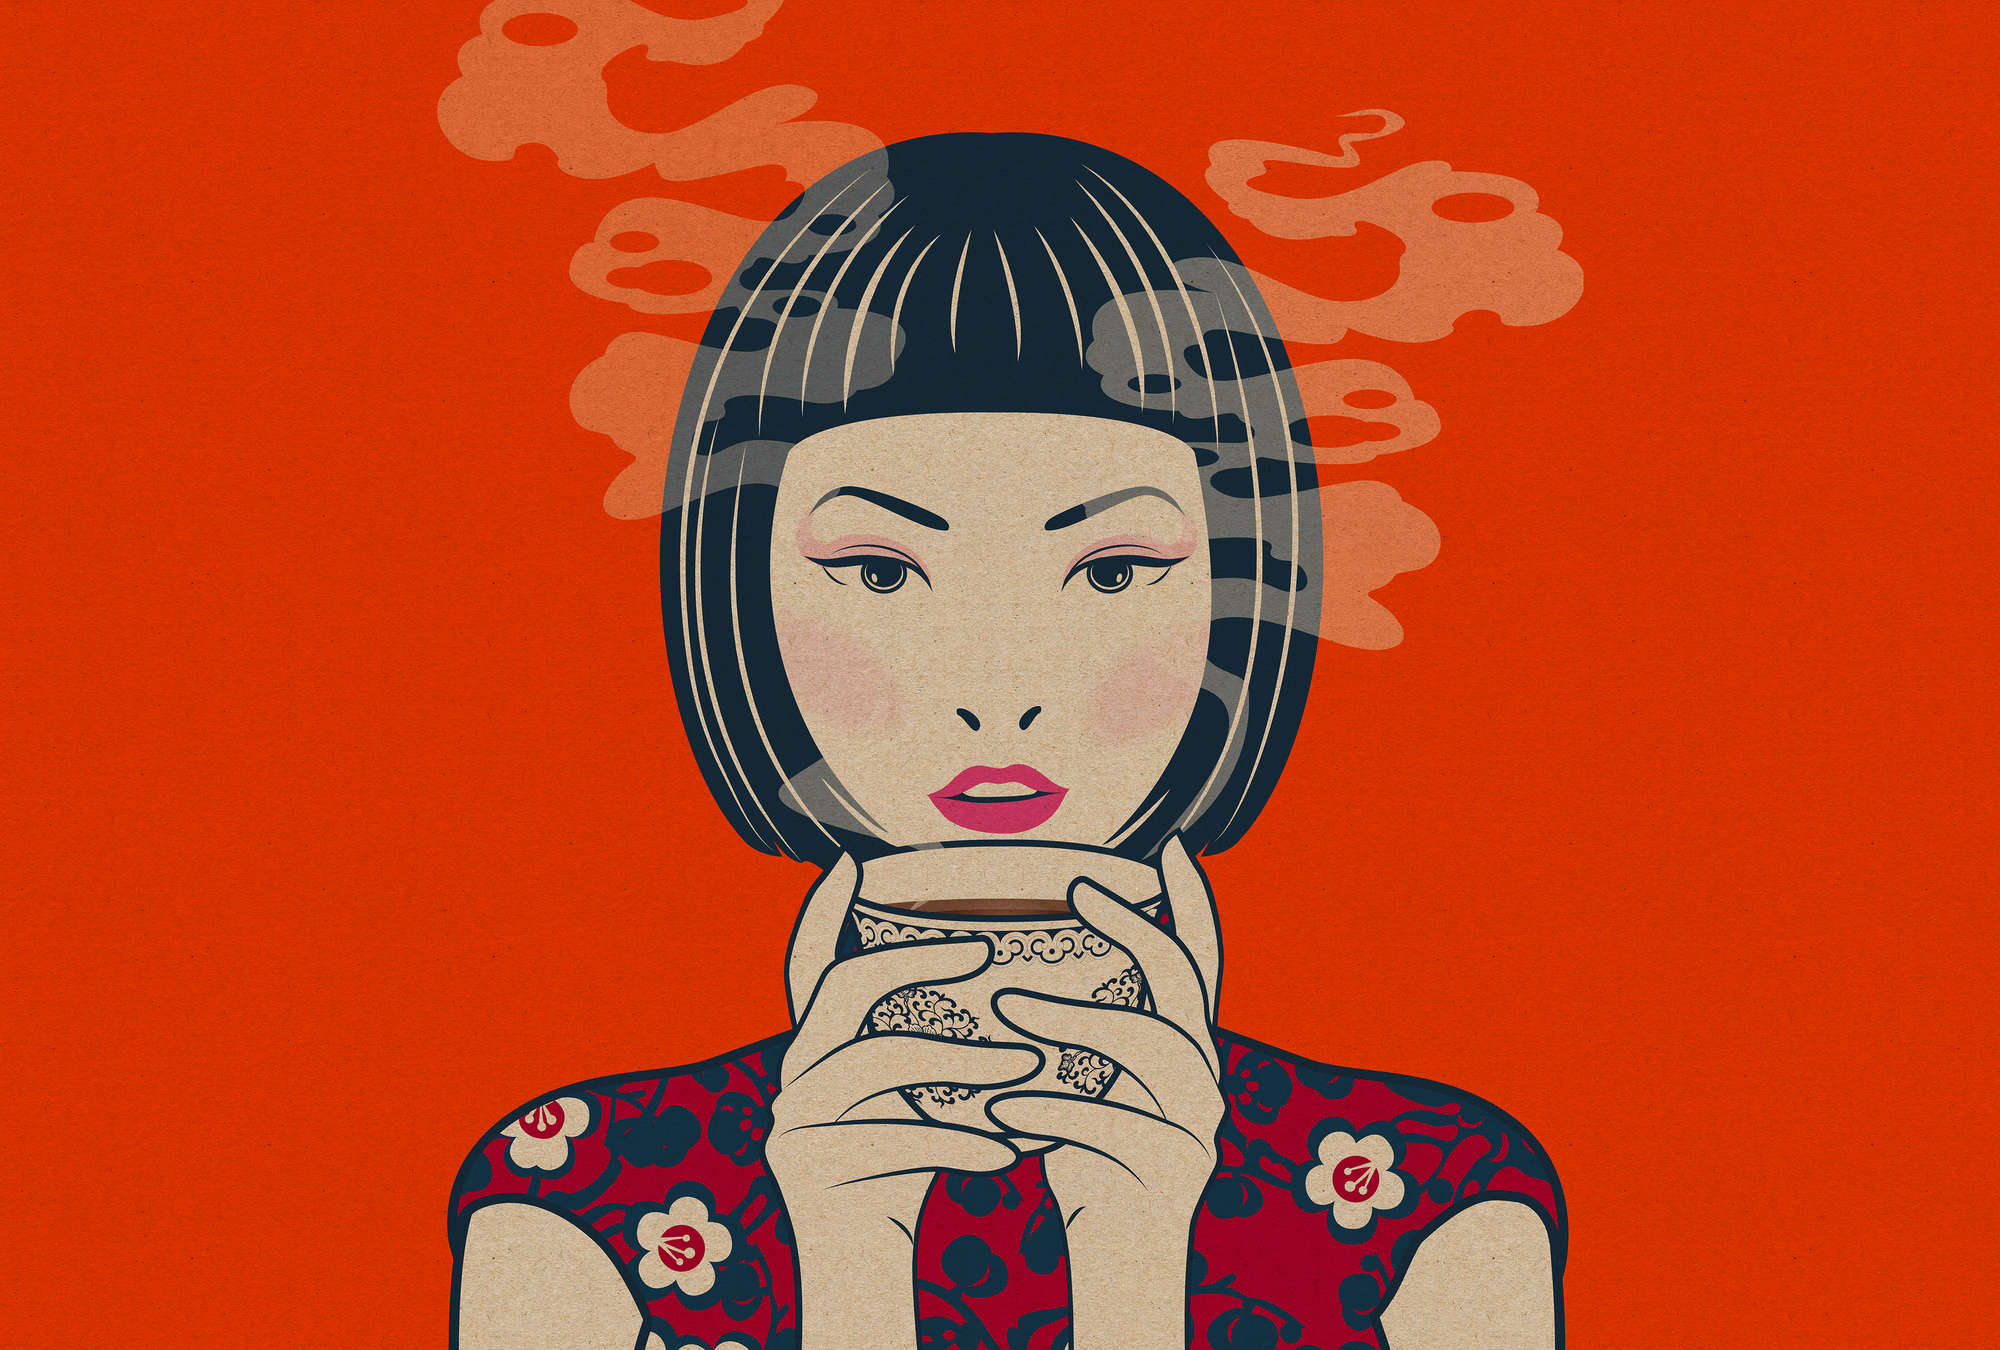             Akari 2 - L'ora del tè, stile manga in struttura di cartone su carta da parati - Beige, Arancione | Vello liscio opaco
        